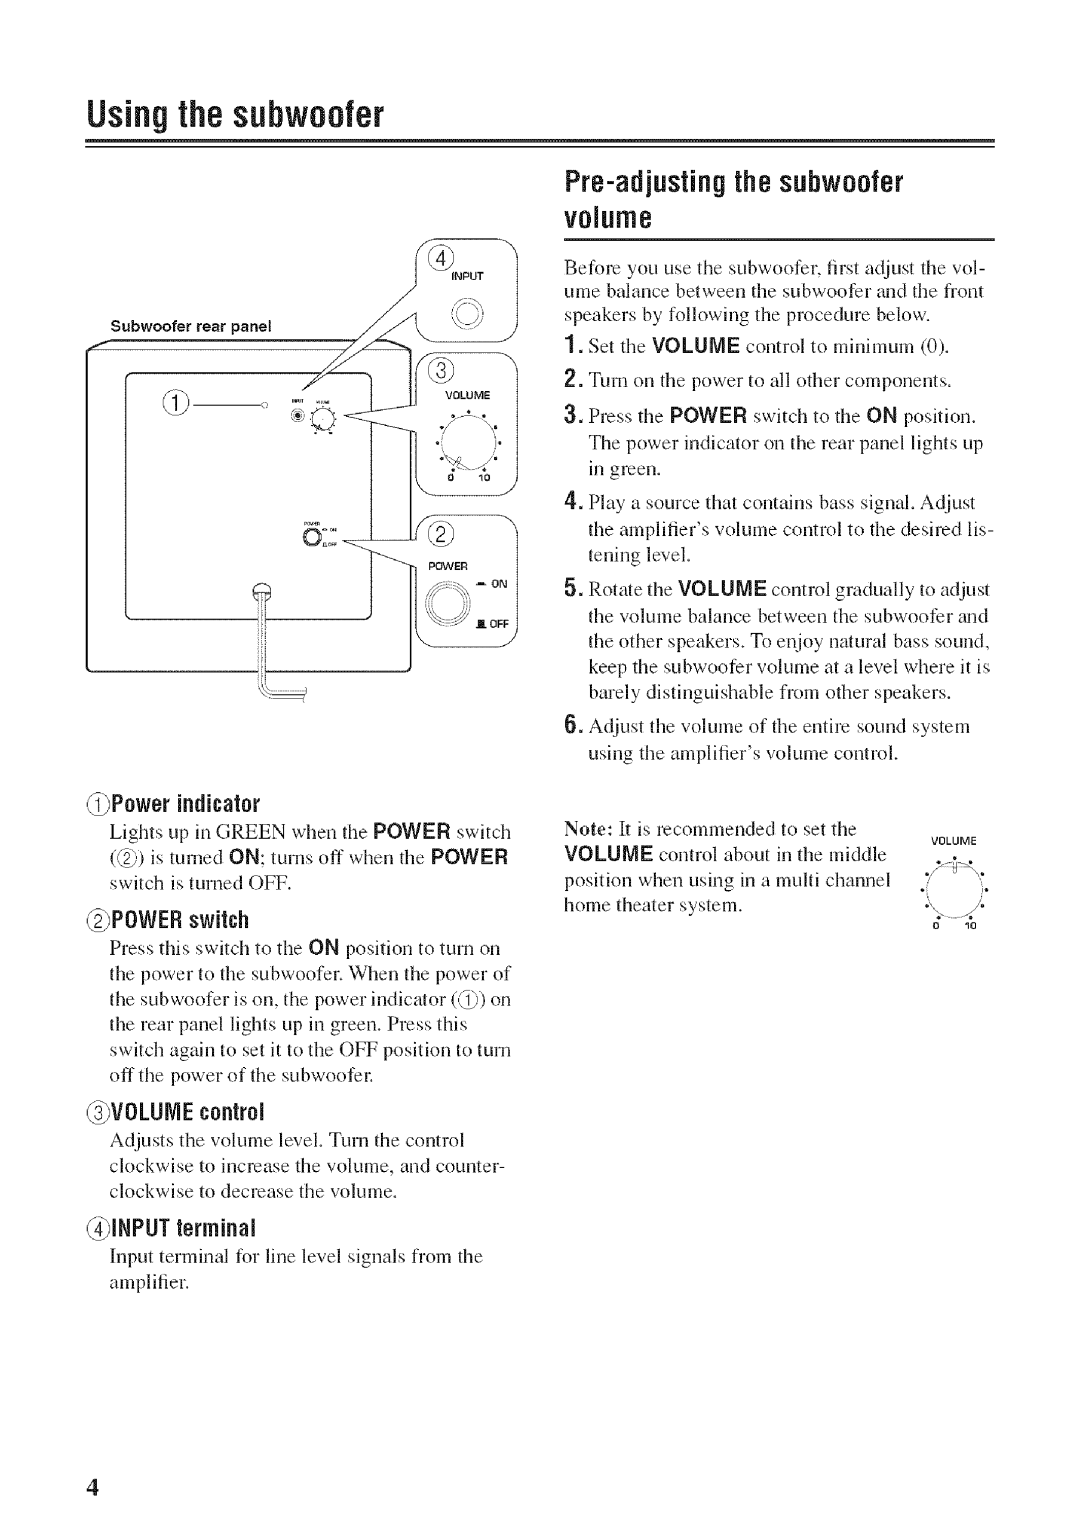 Yamaha SW012 manual Usingthe subwoofer, voJuNle, @iNPUT terminal, @Power indicator, Pre-adjustinothe subwoofer 